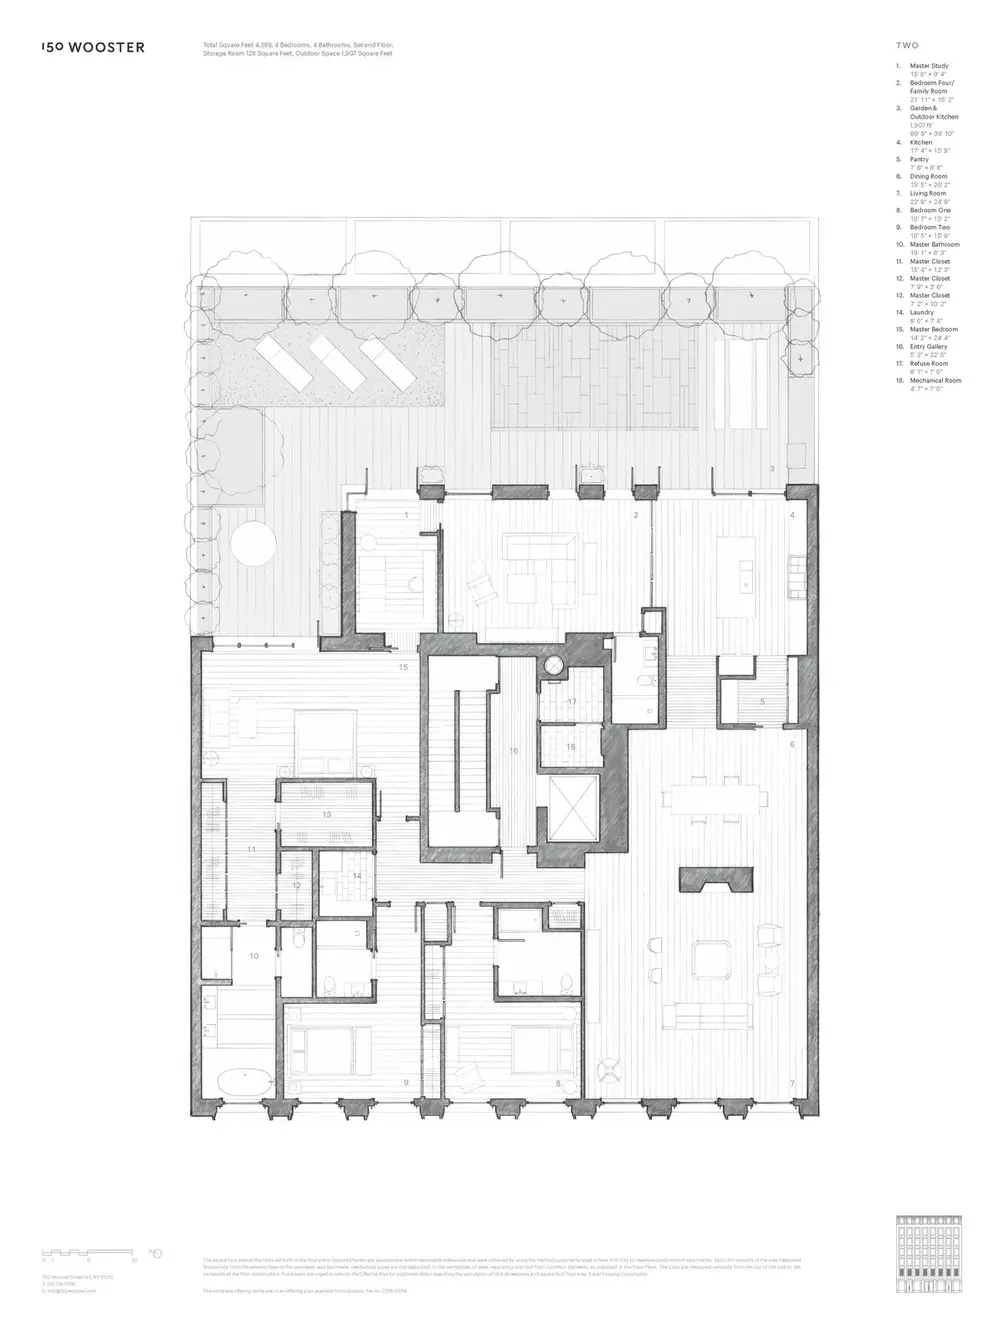 150 Wooster Street floor plan